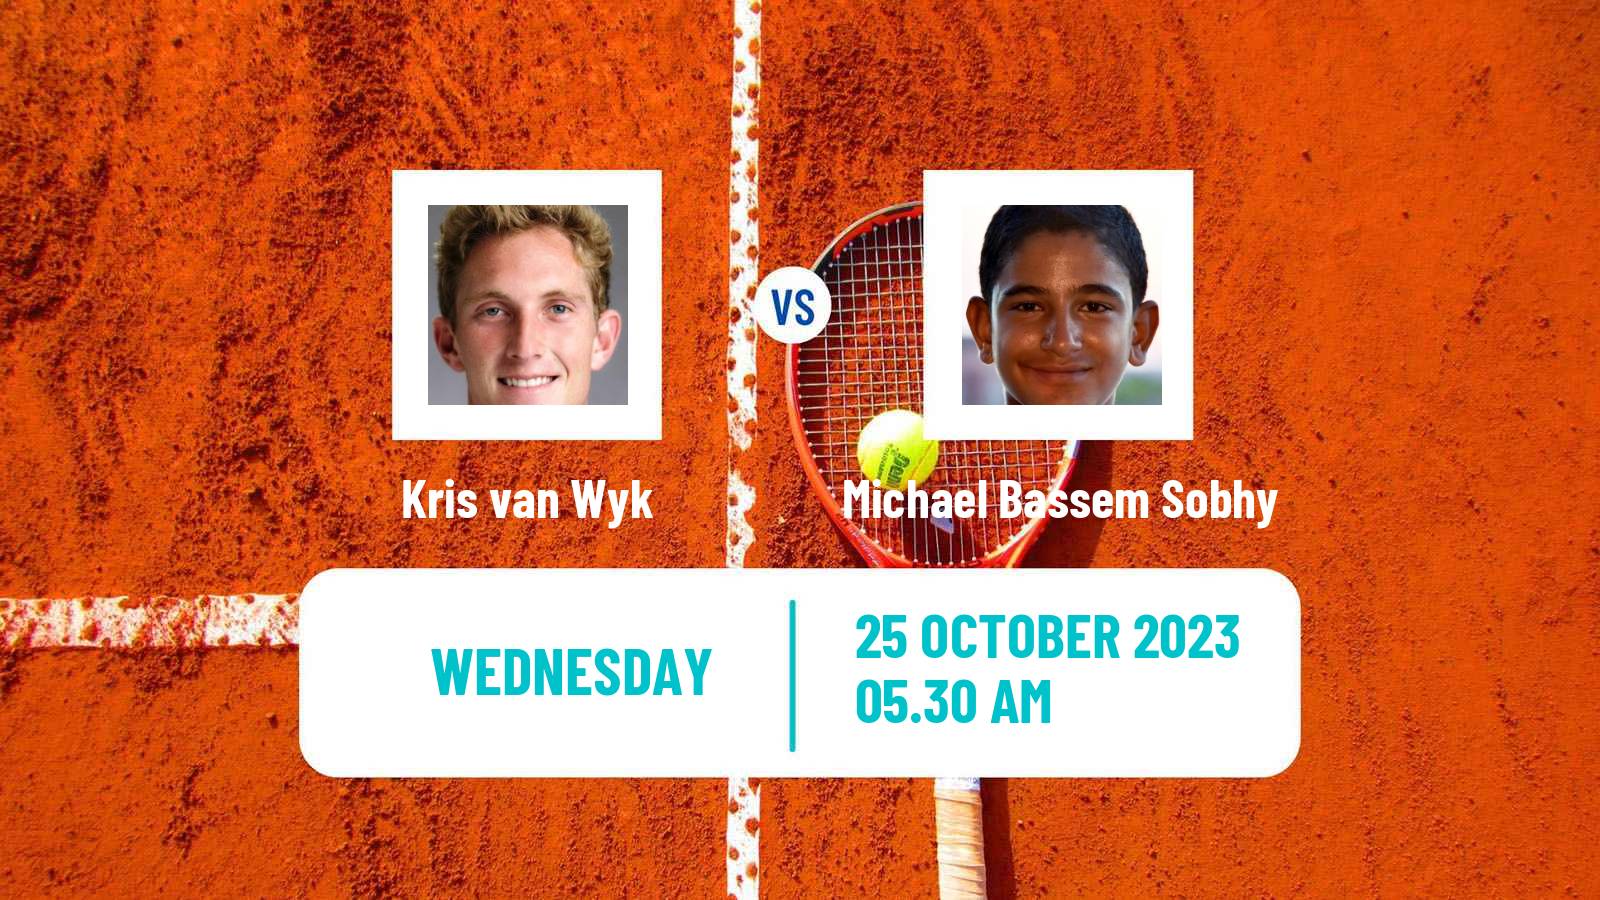 Tennis ITF M15 Sharm Elsheikh 22 Men Kris van Wyk - Michael Bassem Sobhy